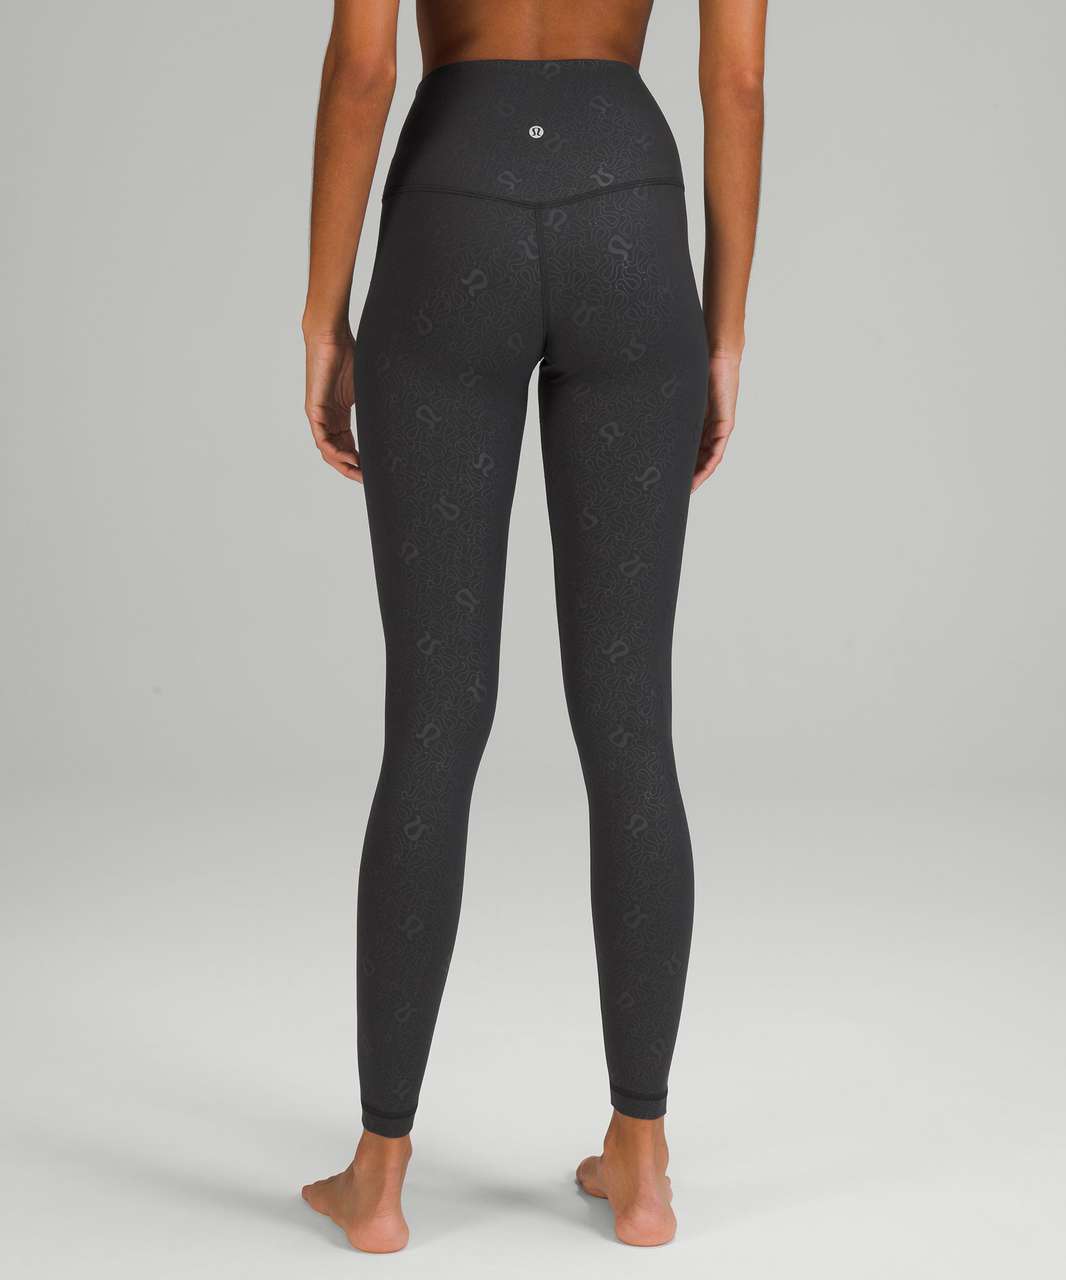 SOLD NEW W TAG Lululemon Align leggings black with pockets 28 🤩 Size 6  #lululemonleggings #lululemonalign #lululemonforsale #f4f #f